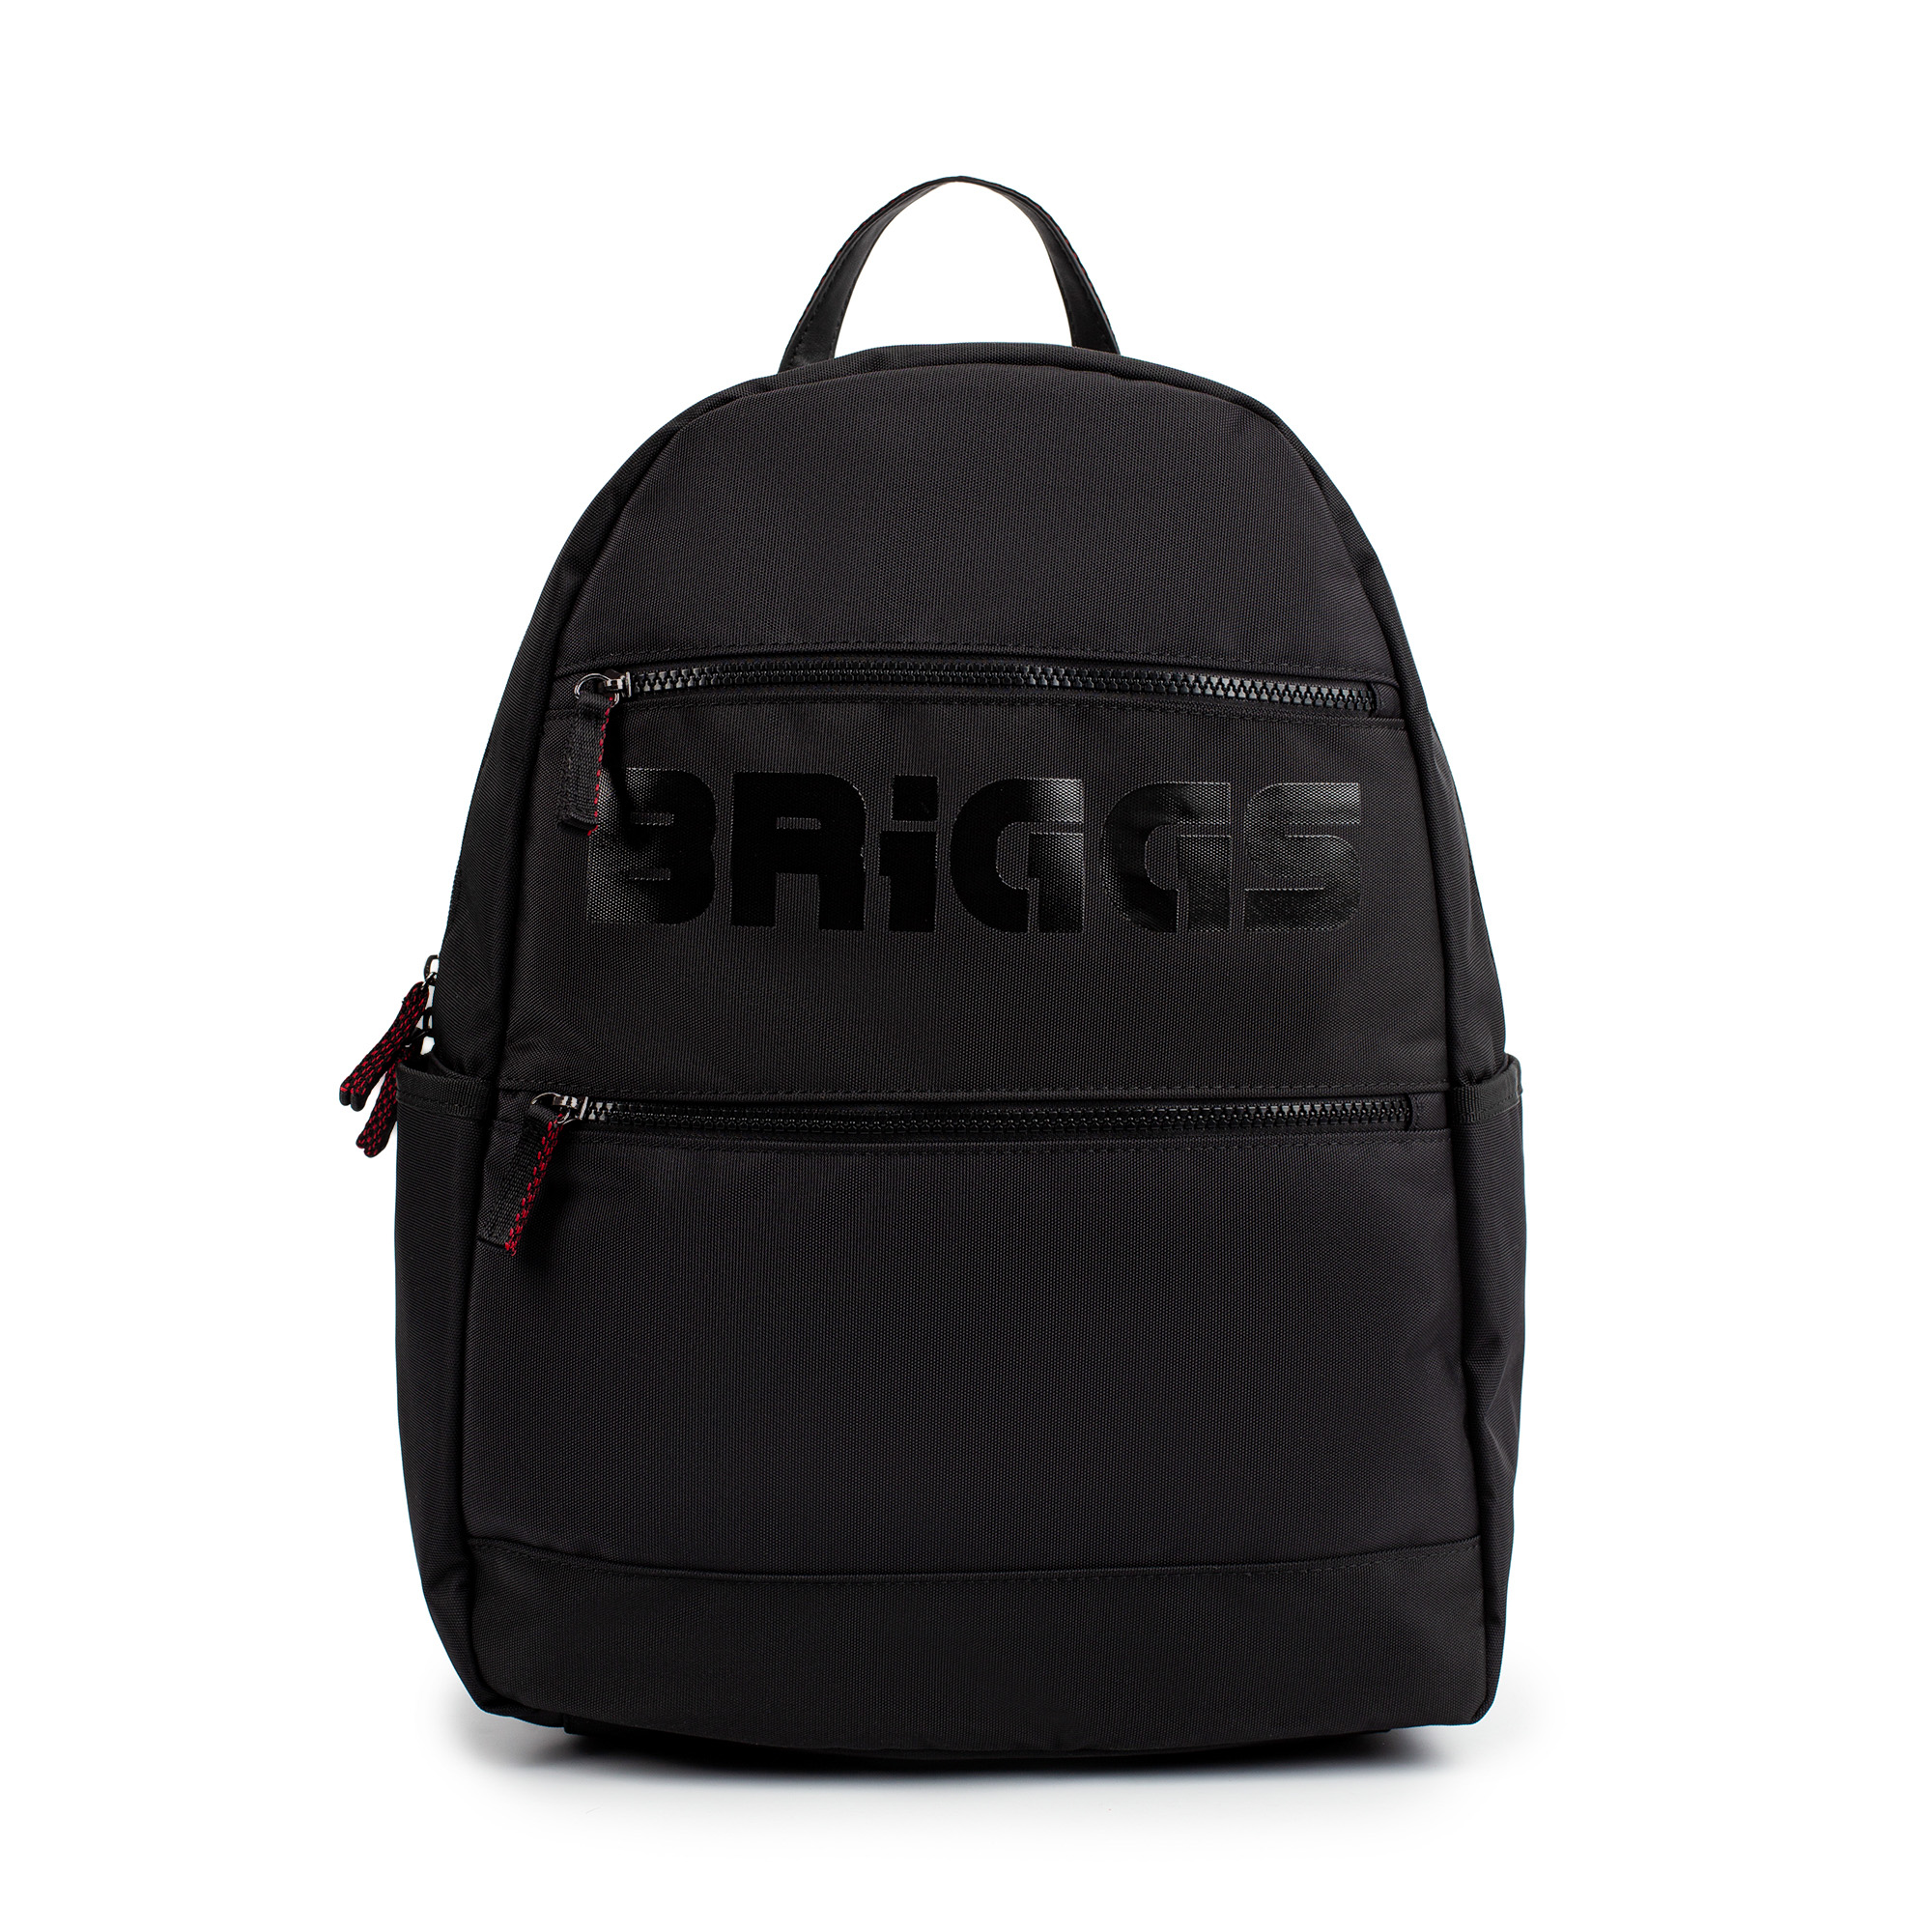 Рюкзак BRIGGS черного цвета